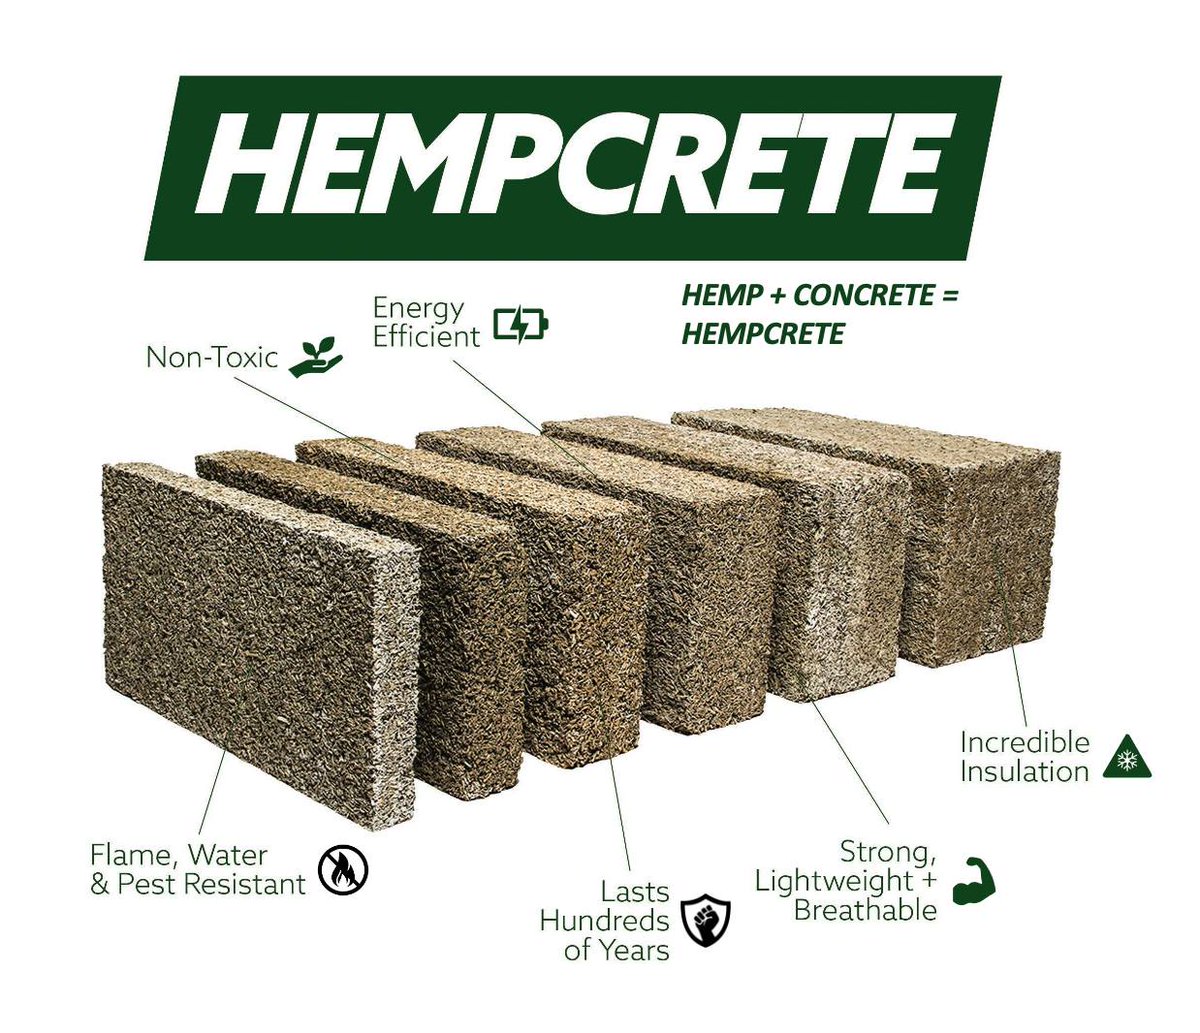 Hempcrete, a form of concrete 

#cannabiscommunity #cannabisculture #cannabisindustry